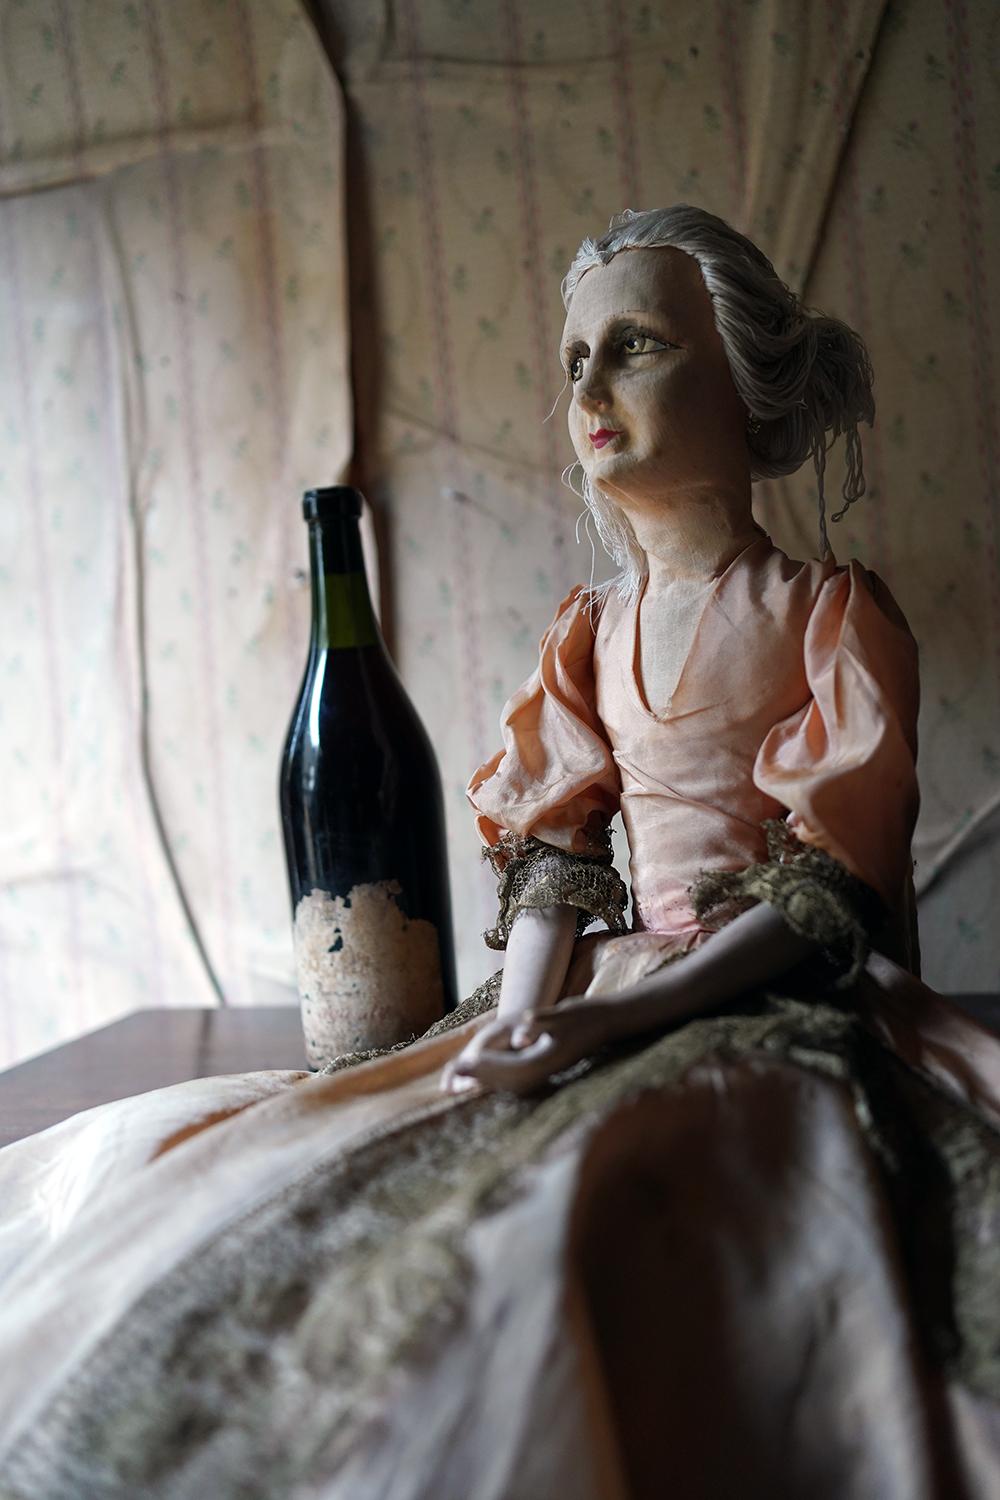 1920s boudoir doll